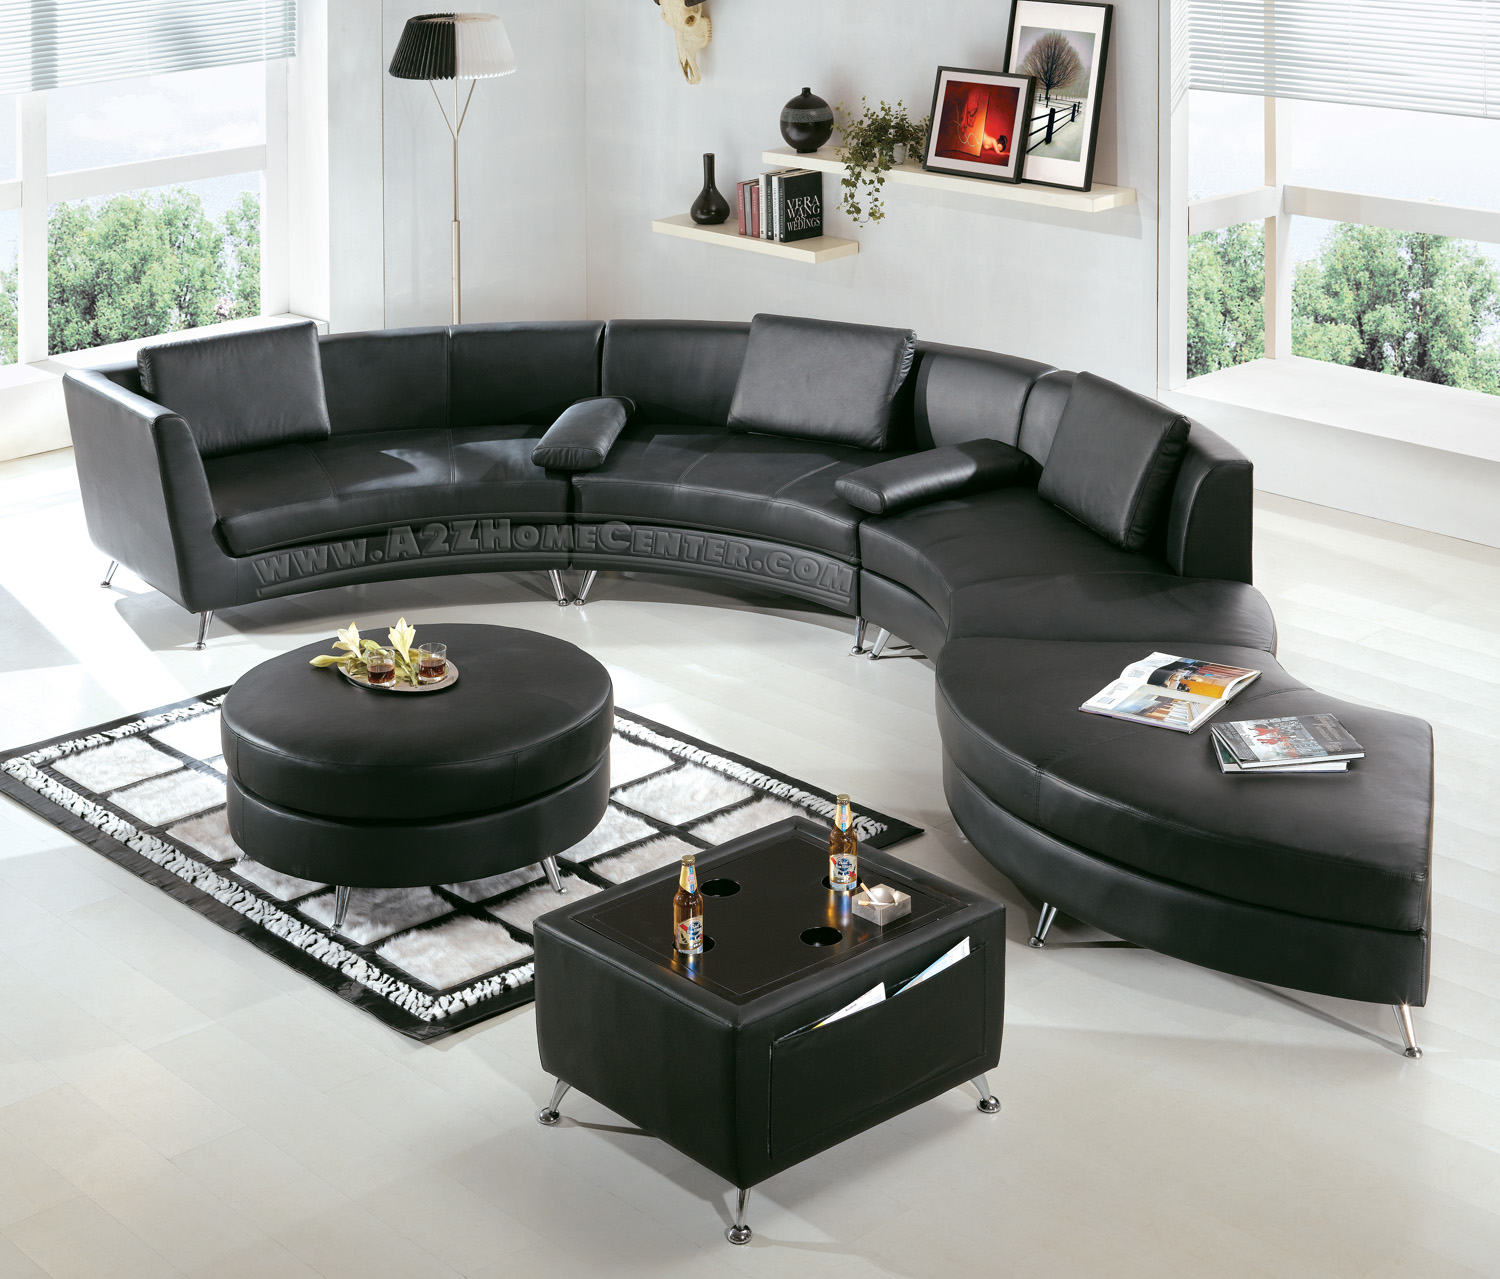 Discount Contemporary Furniture